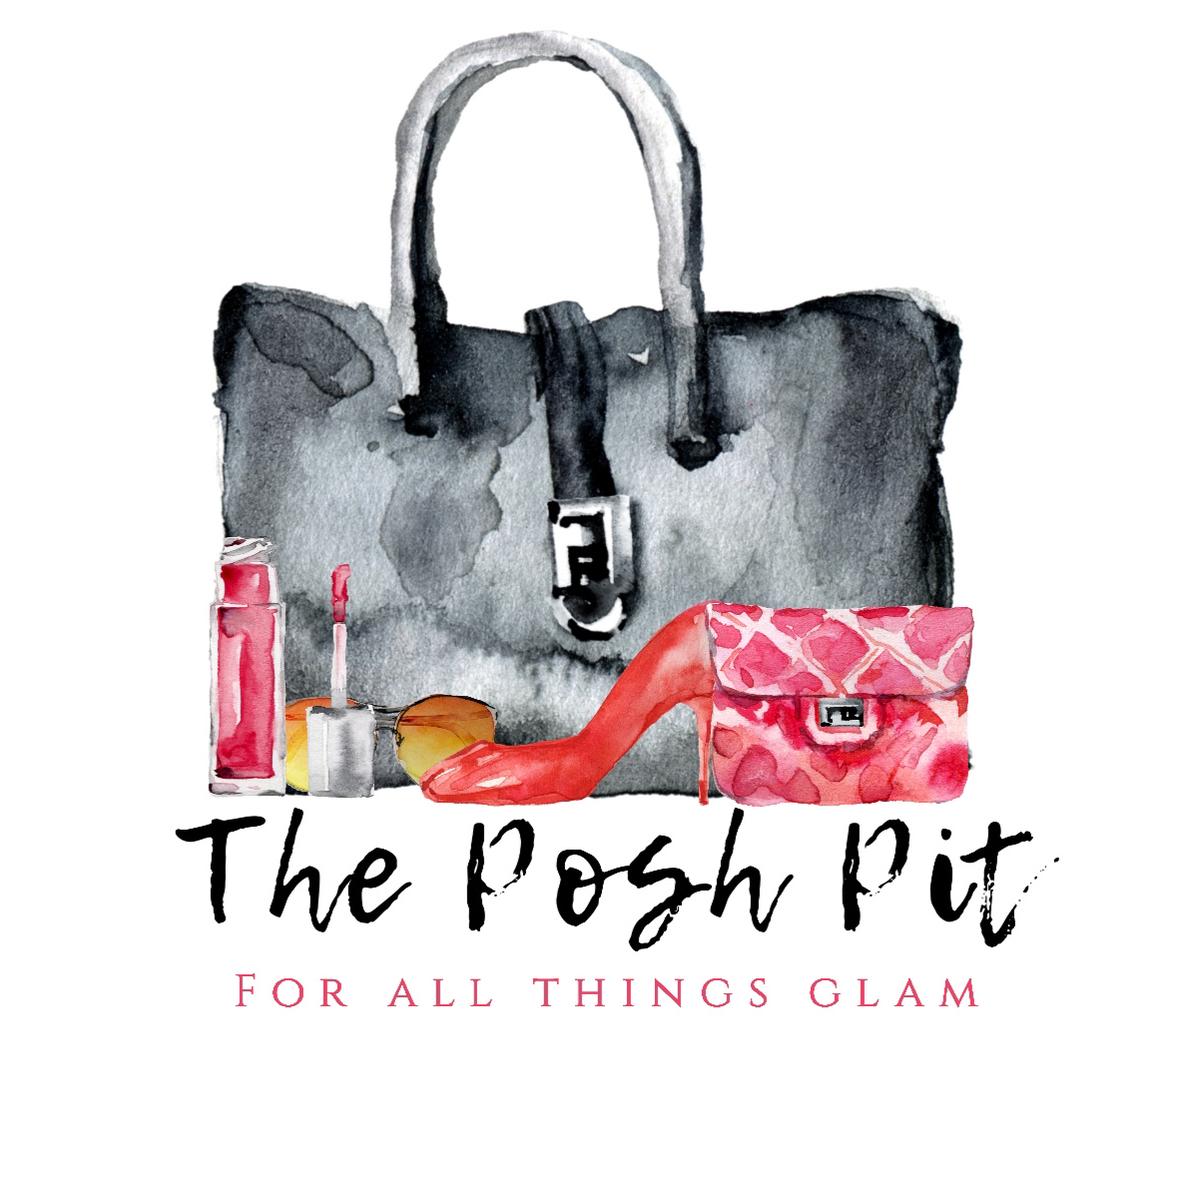 The Posh Pit's images